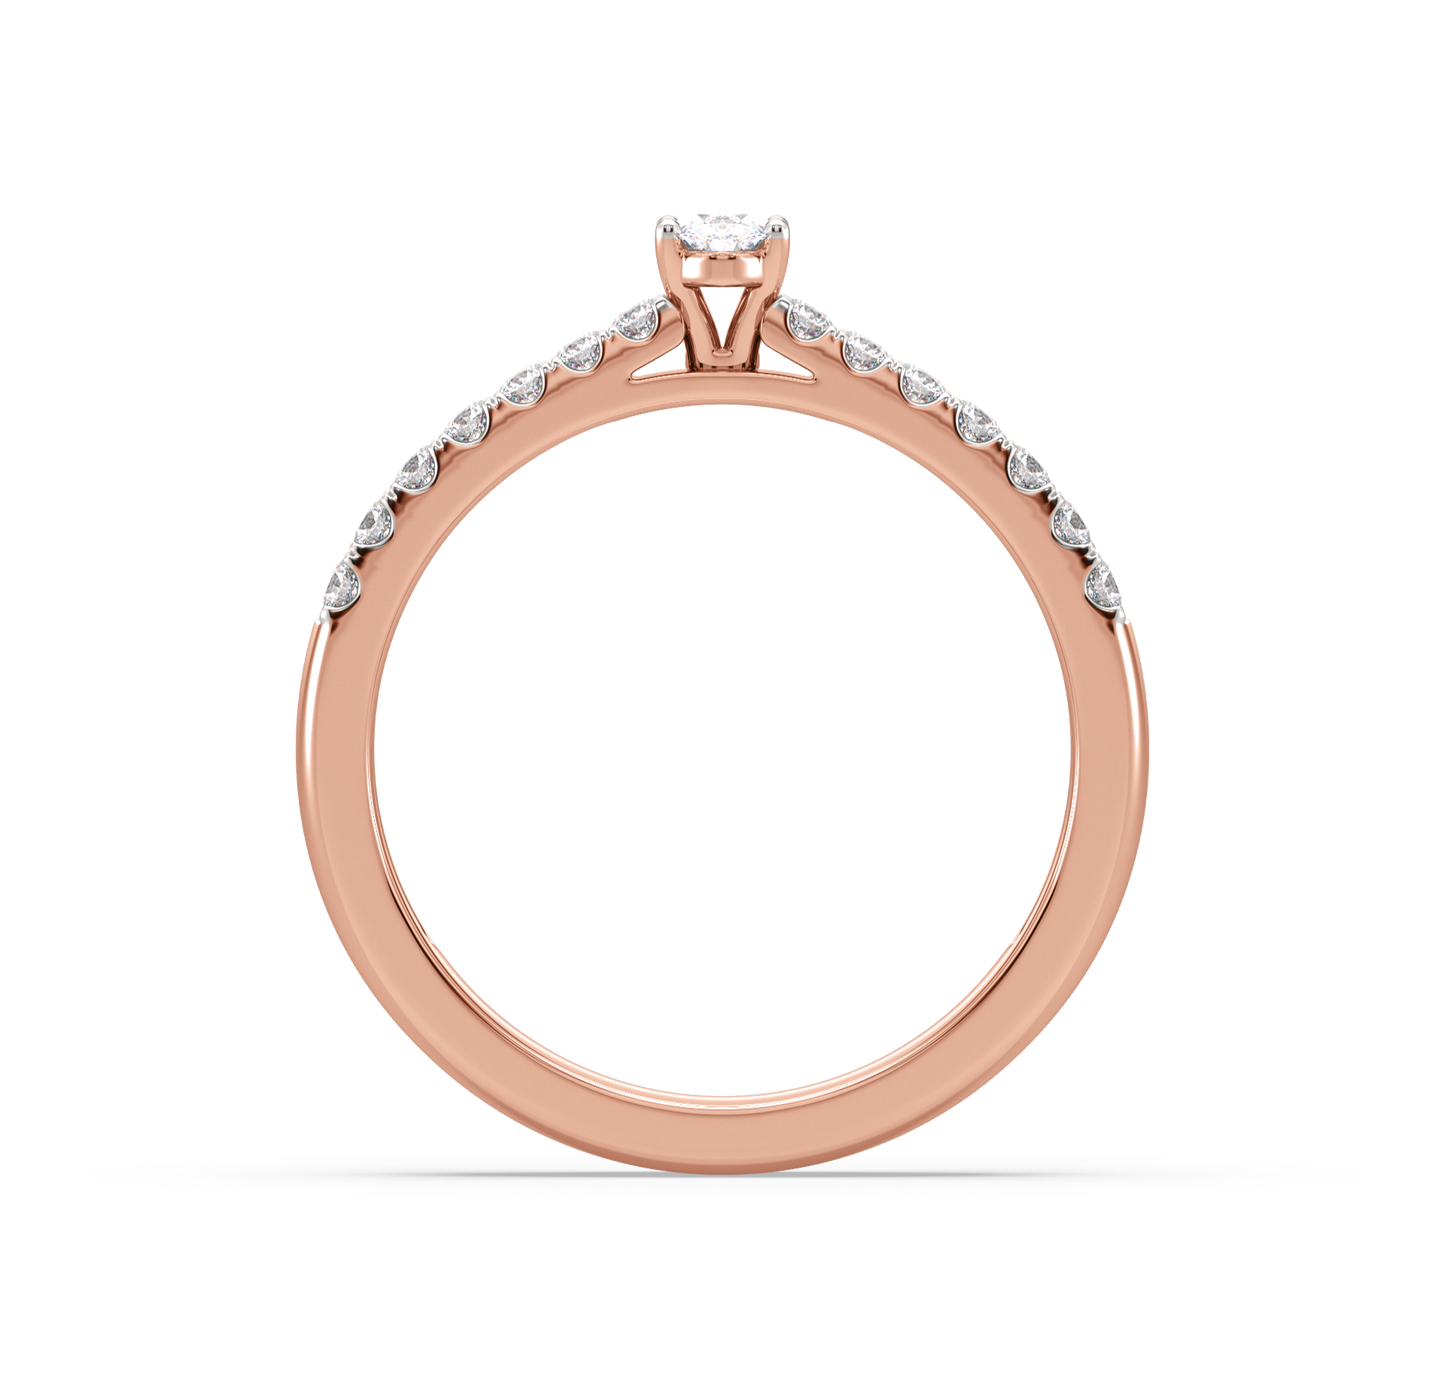 Customised ring RG21010-PH21019